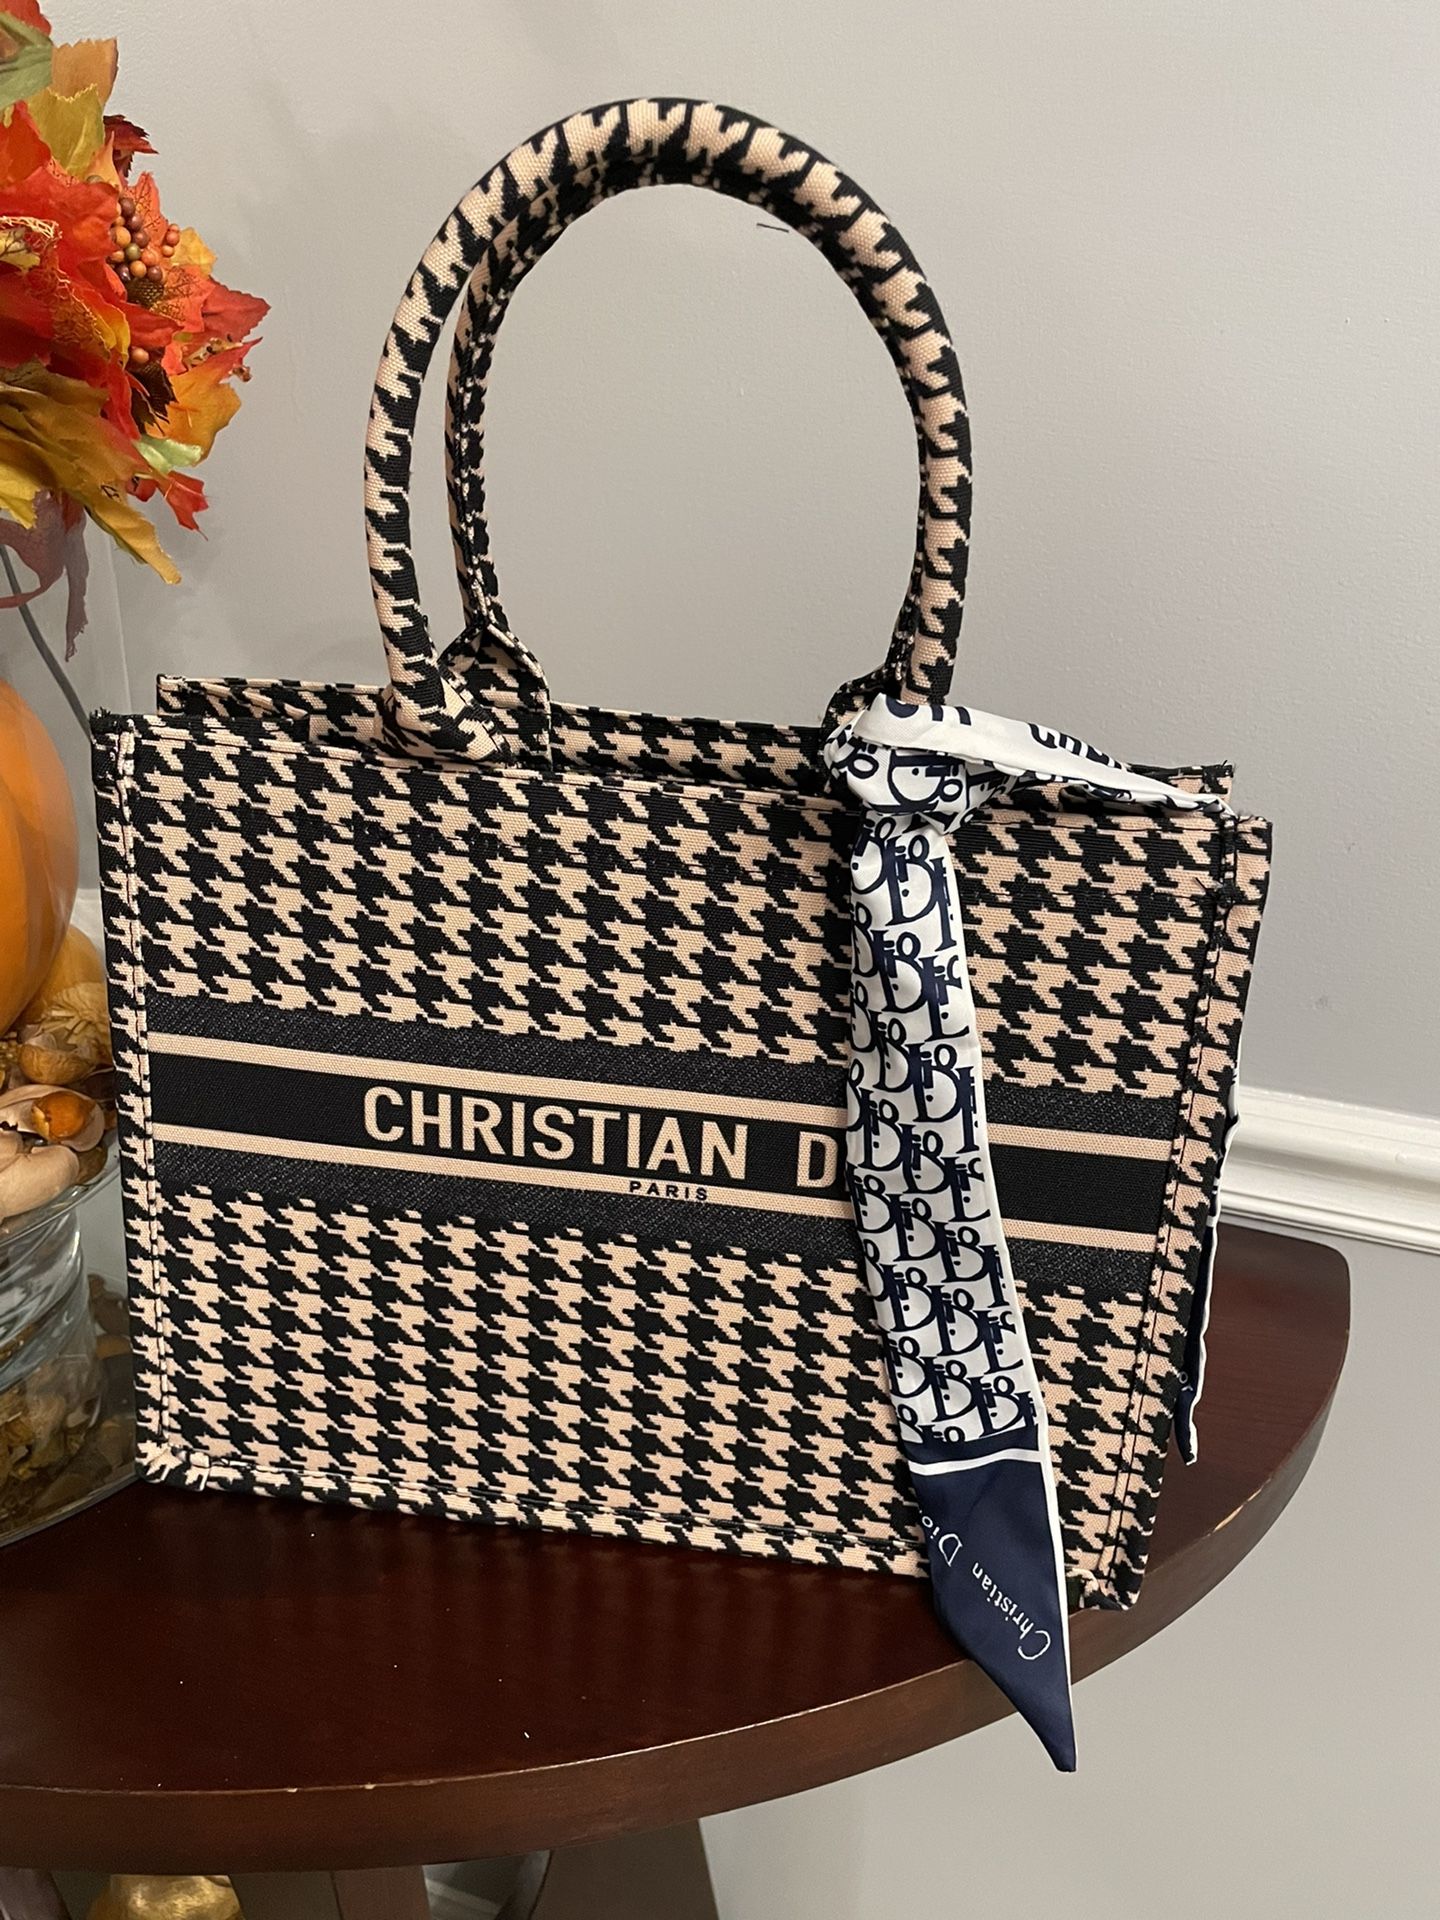 Tote Bag Style Christian Dior , Size Medium